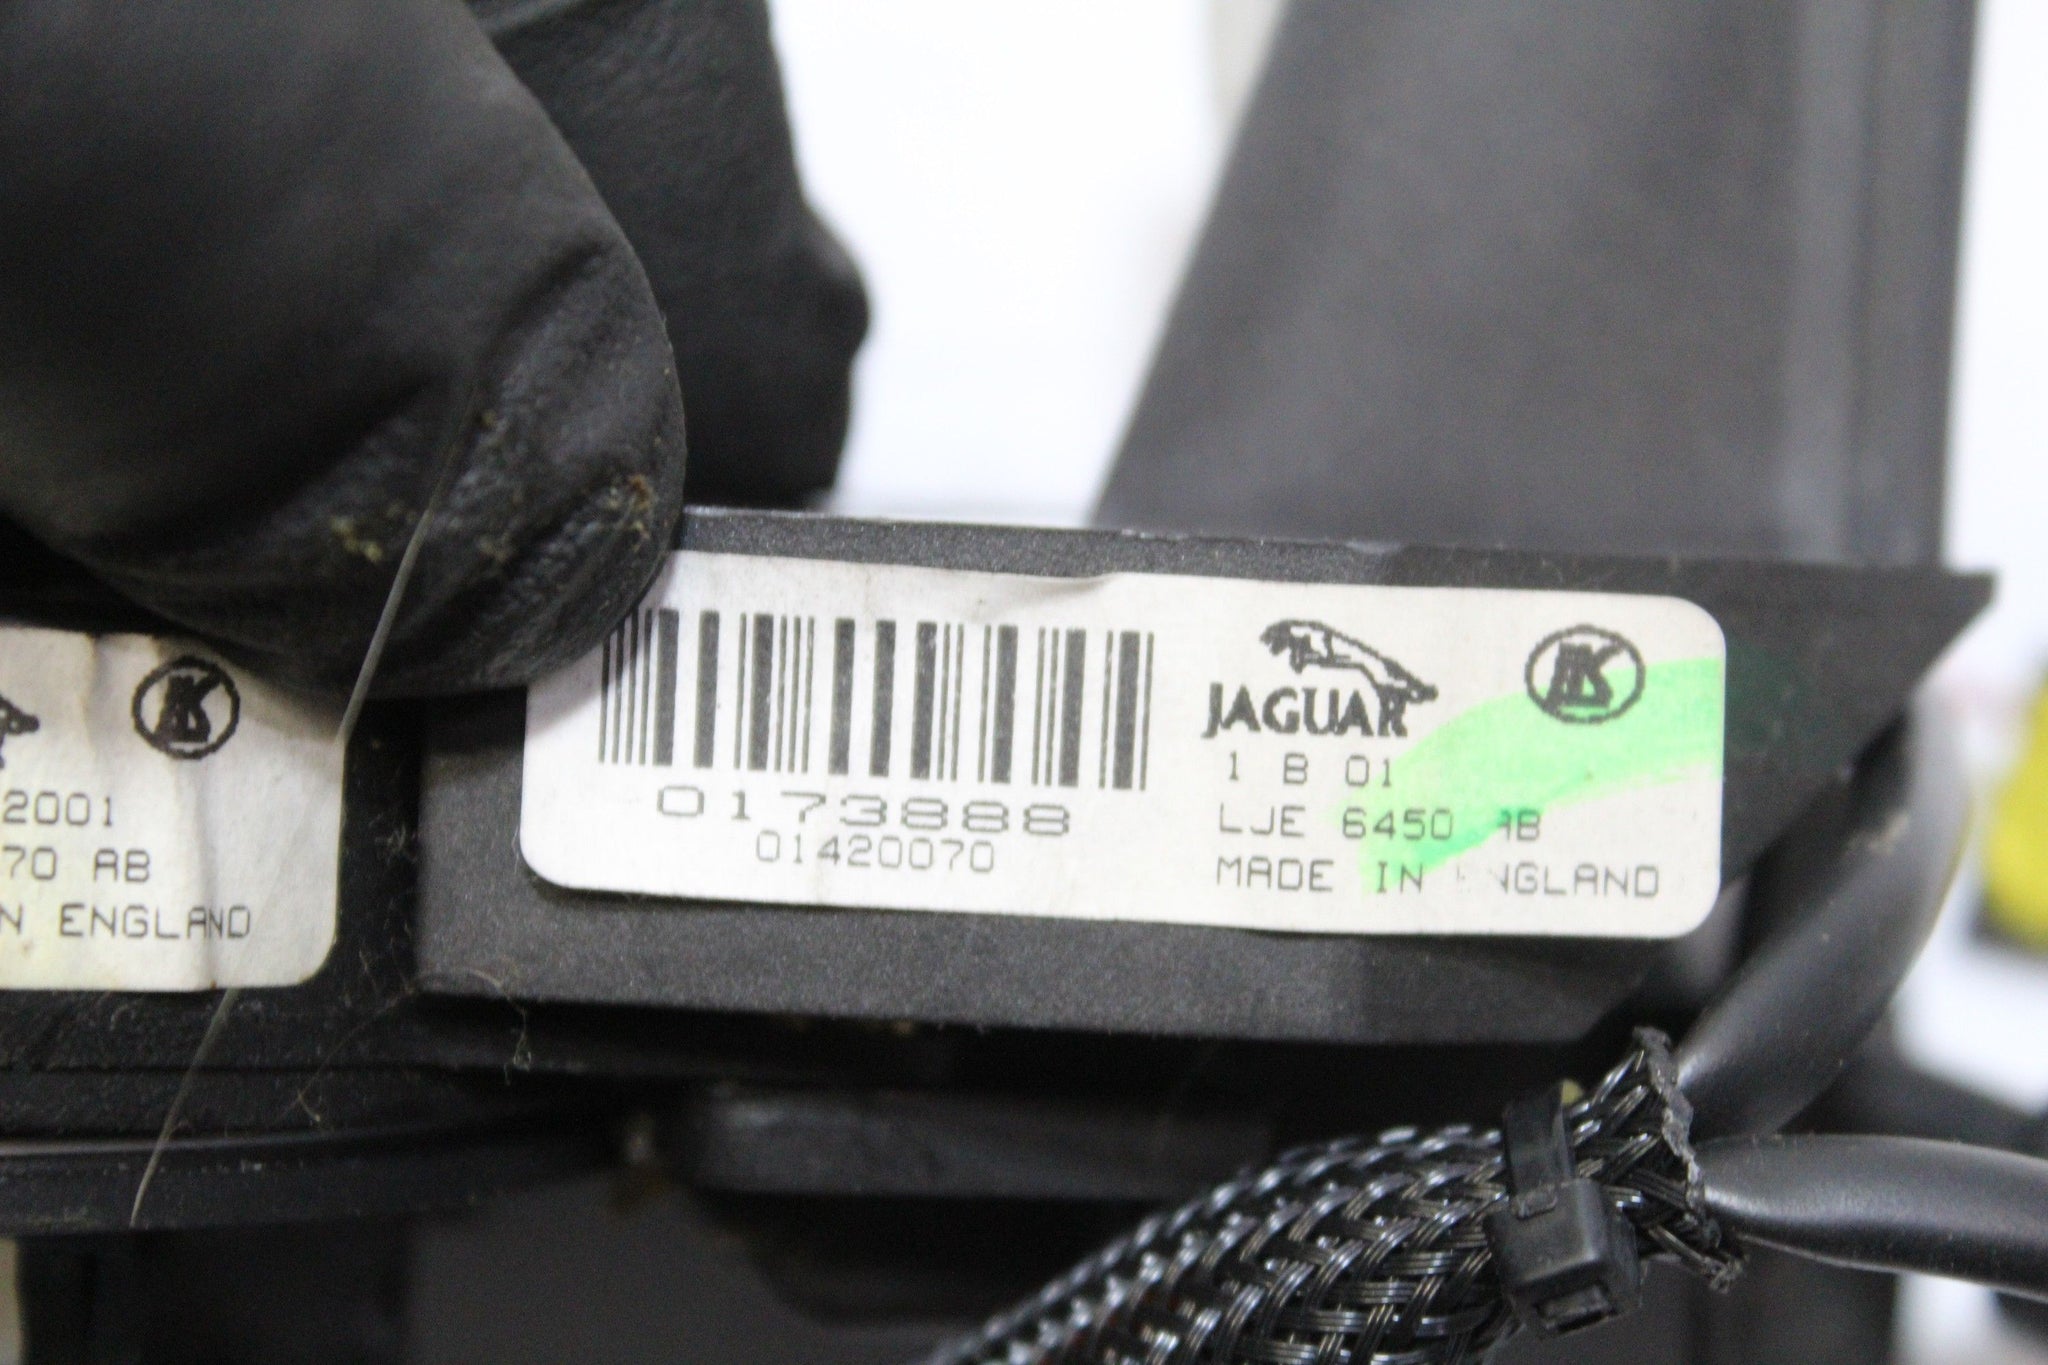 Jaguar XK8 Steering Column Stalks Indicator Wiper Stalks LJE6450AB